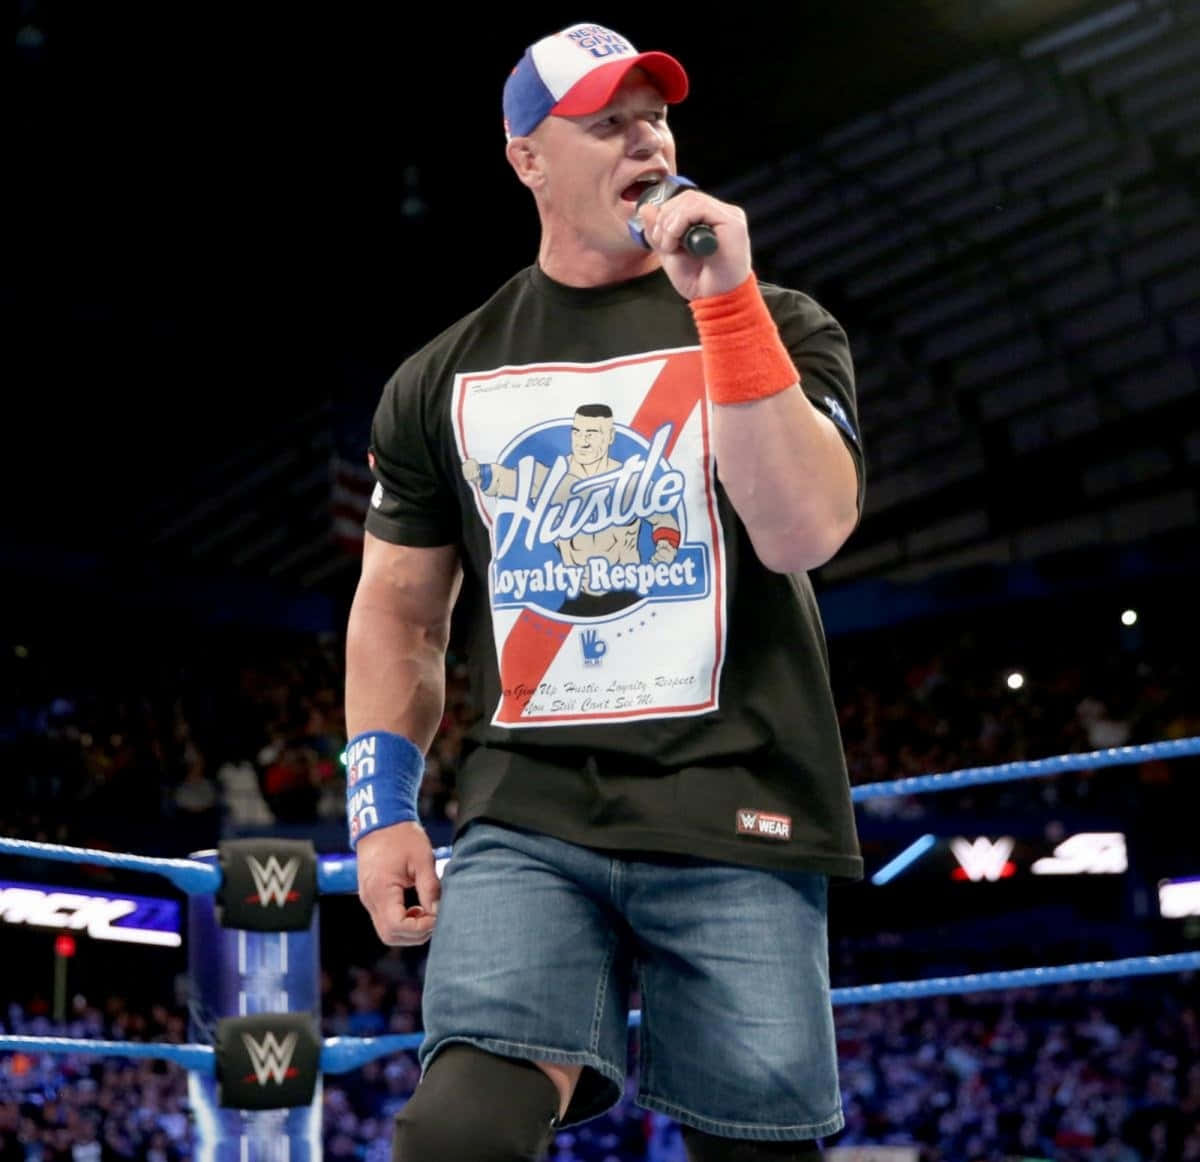 John Cena striking a powerful pose